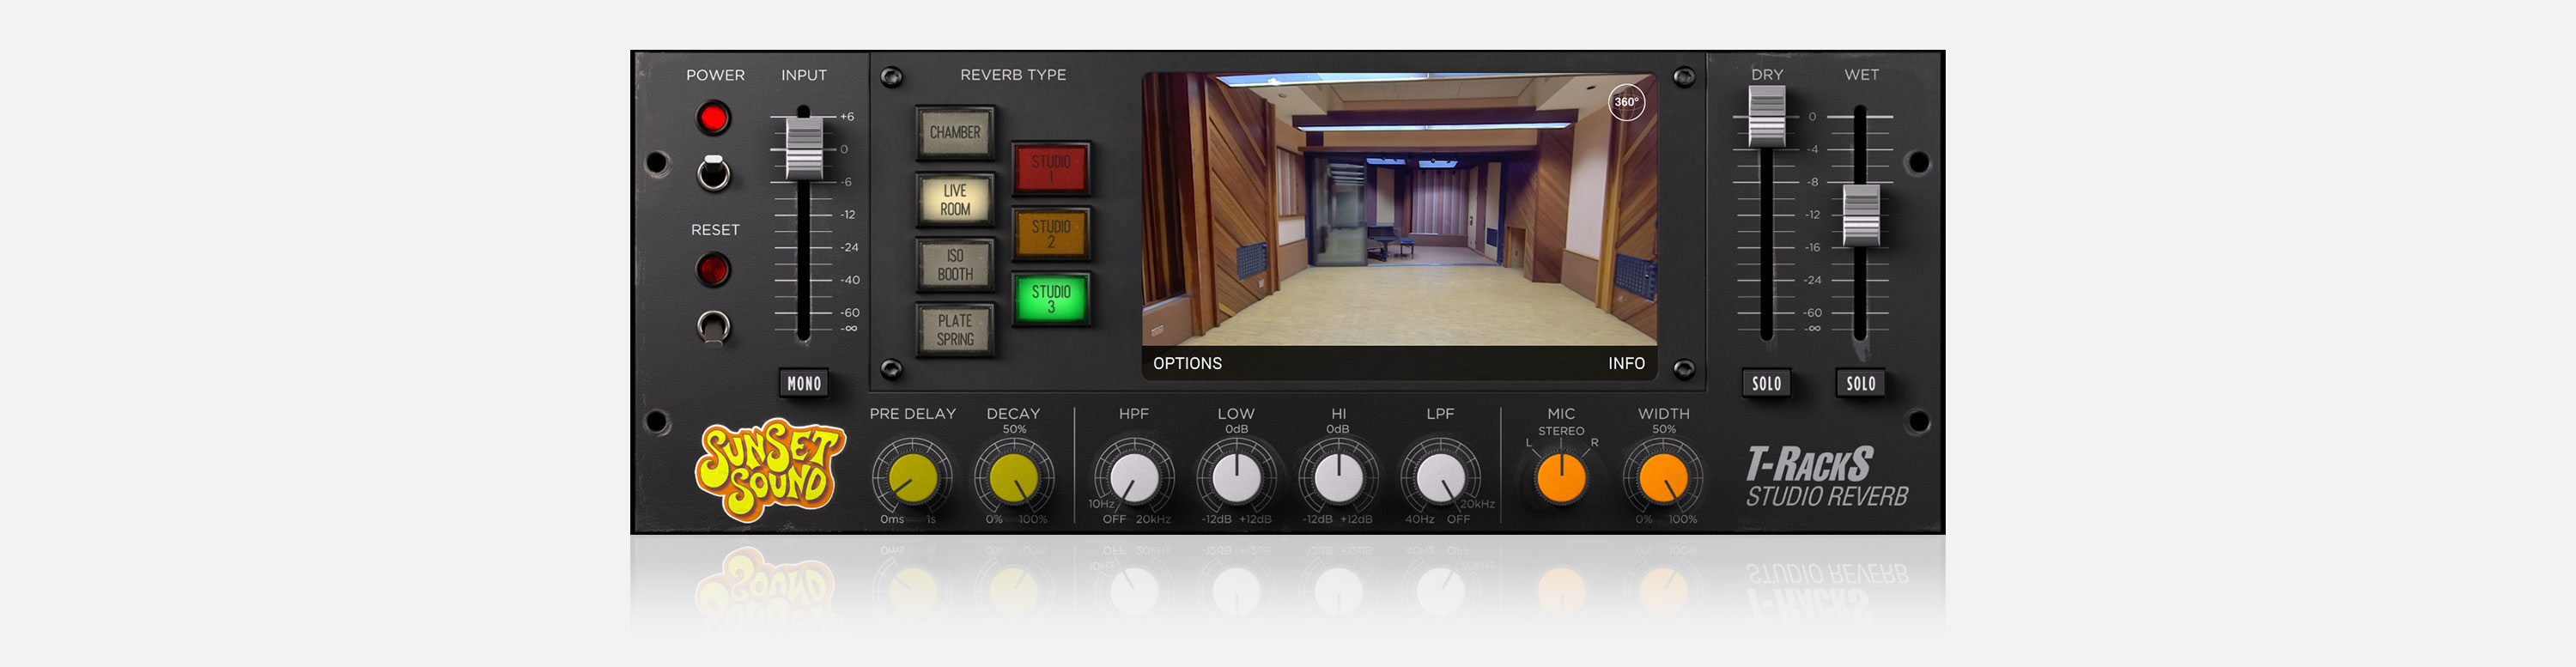 IK Multimedia(ソフトウェア) T-RackS Sunset Sound Studio Reverb – beatcloud